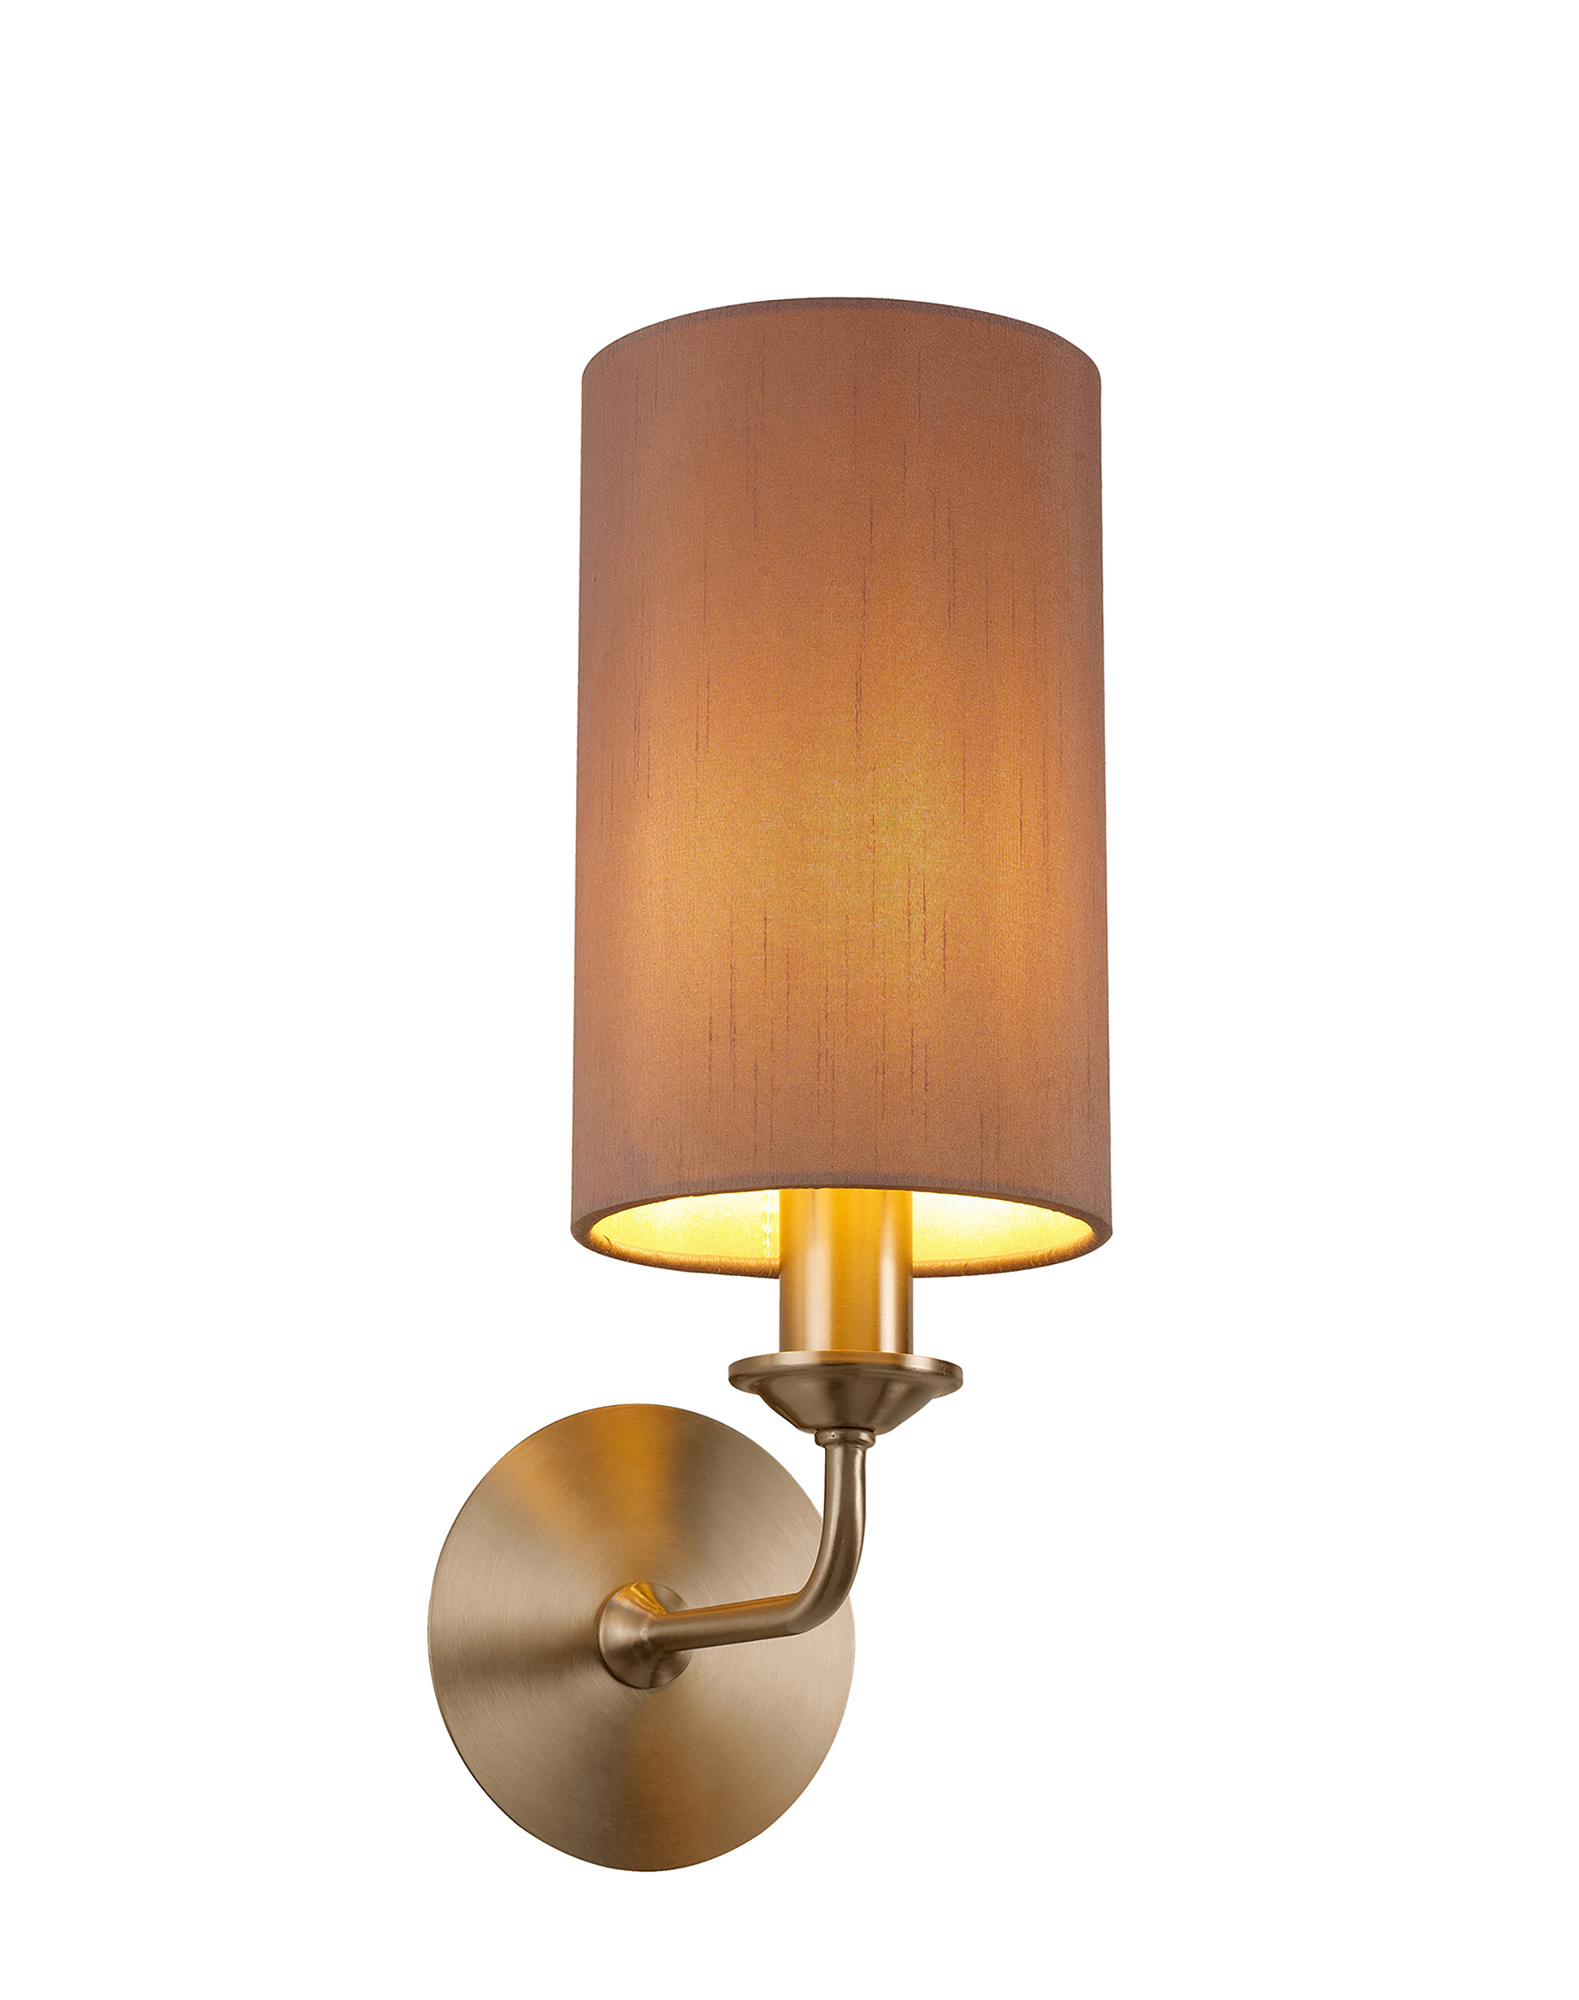 DK0070  Banyan Wall Lamp 1 Light Satin Nickel, Taupe/Halo Gold